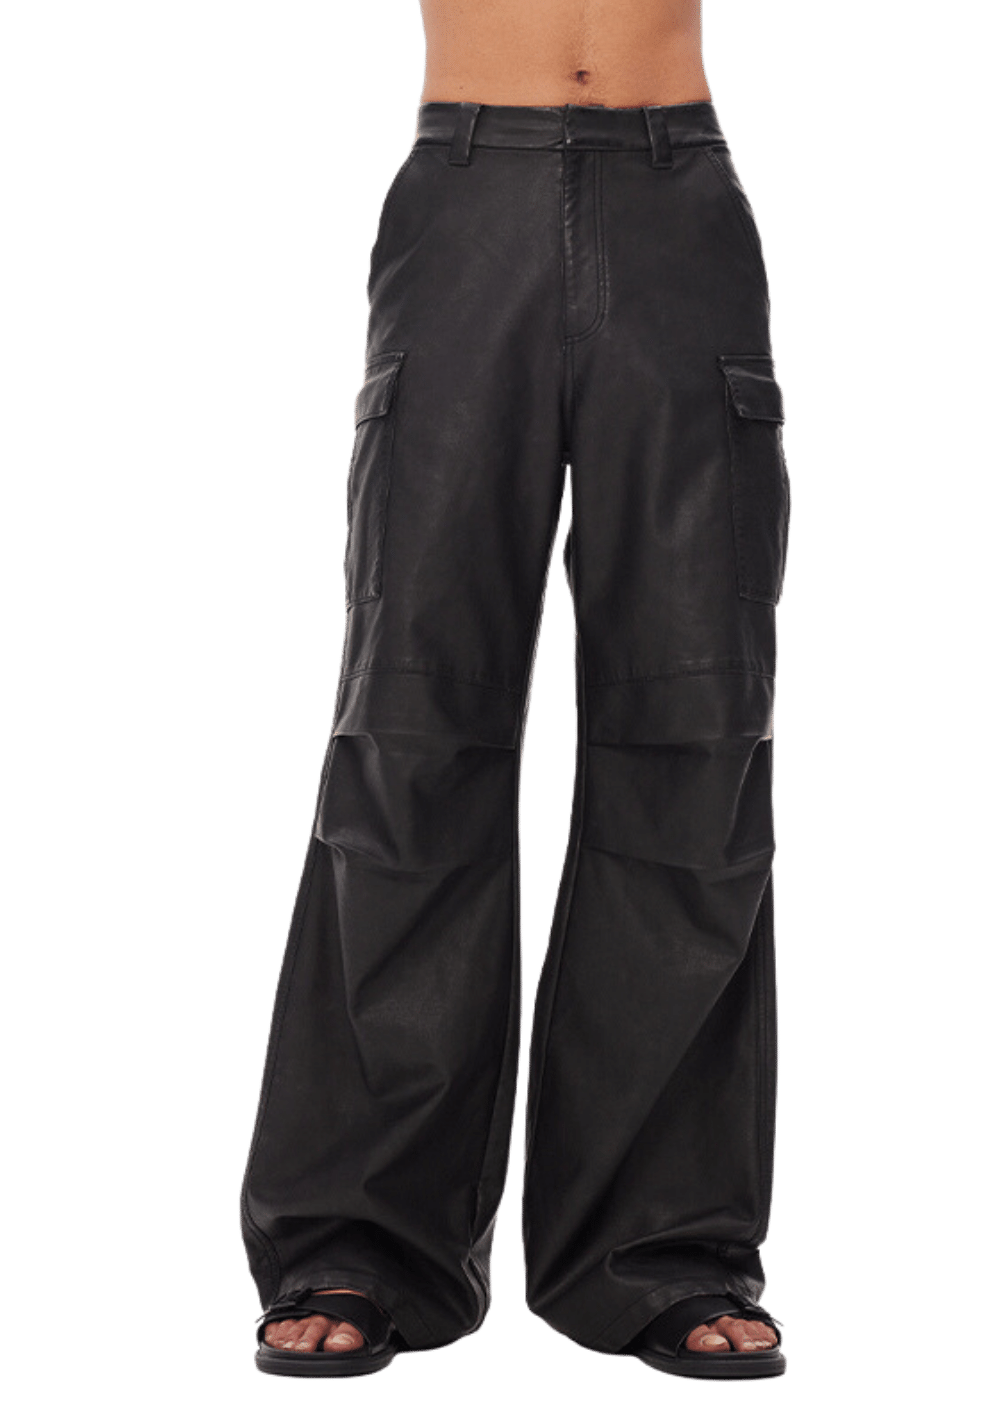 Leather Cargo Pants - PSYLOS 1, Leather Cargo Pants, Pants, TAGLIONI, PSYLOS 1